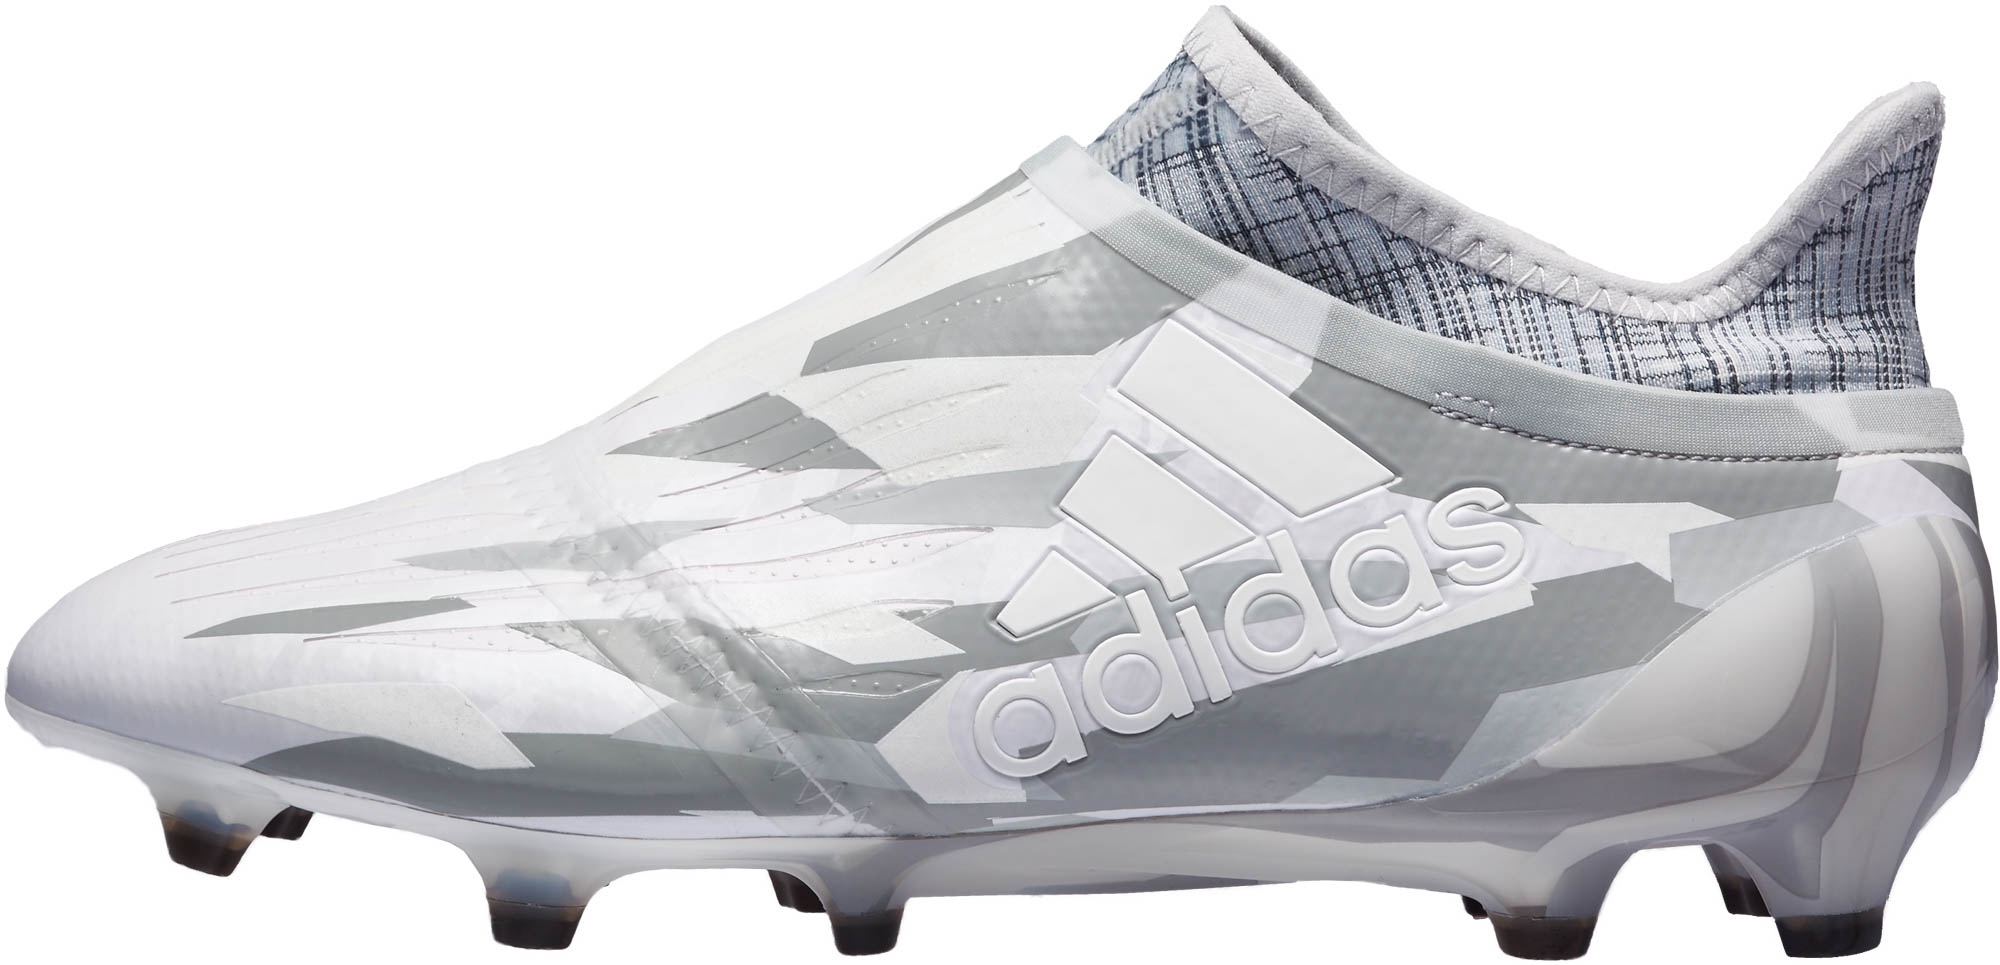 Stroomopwaarts Verpletteren baden adidas X 16+ Purechaos FG Soccer Cleats - White & Black - Soccer Master